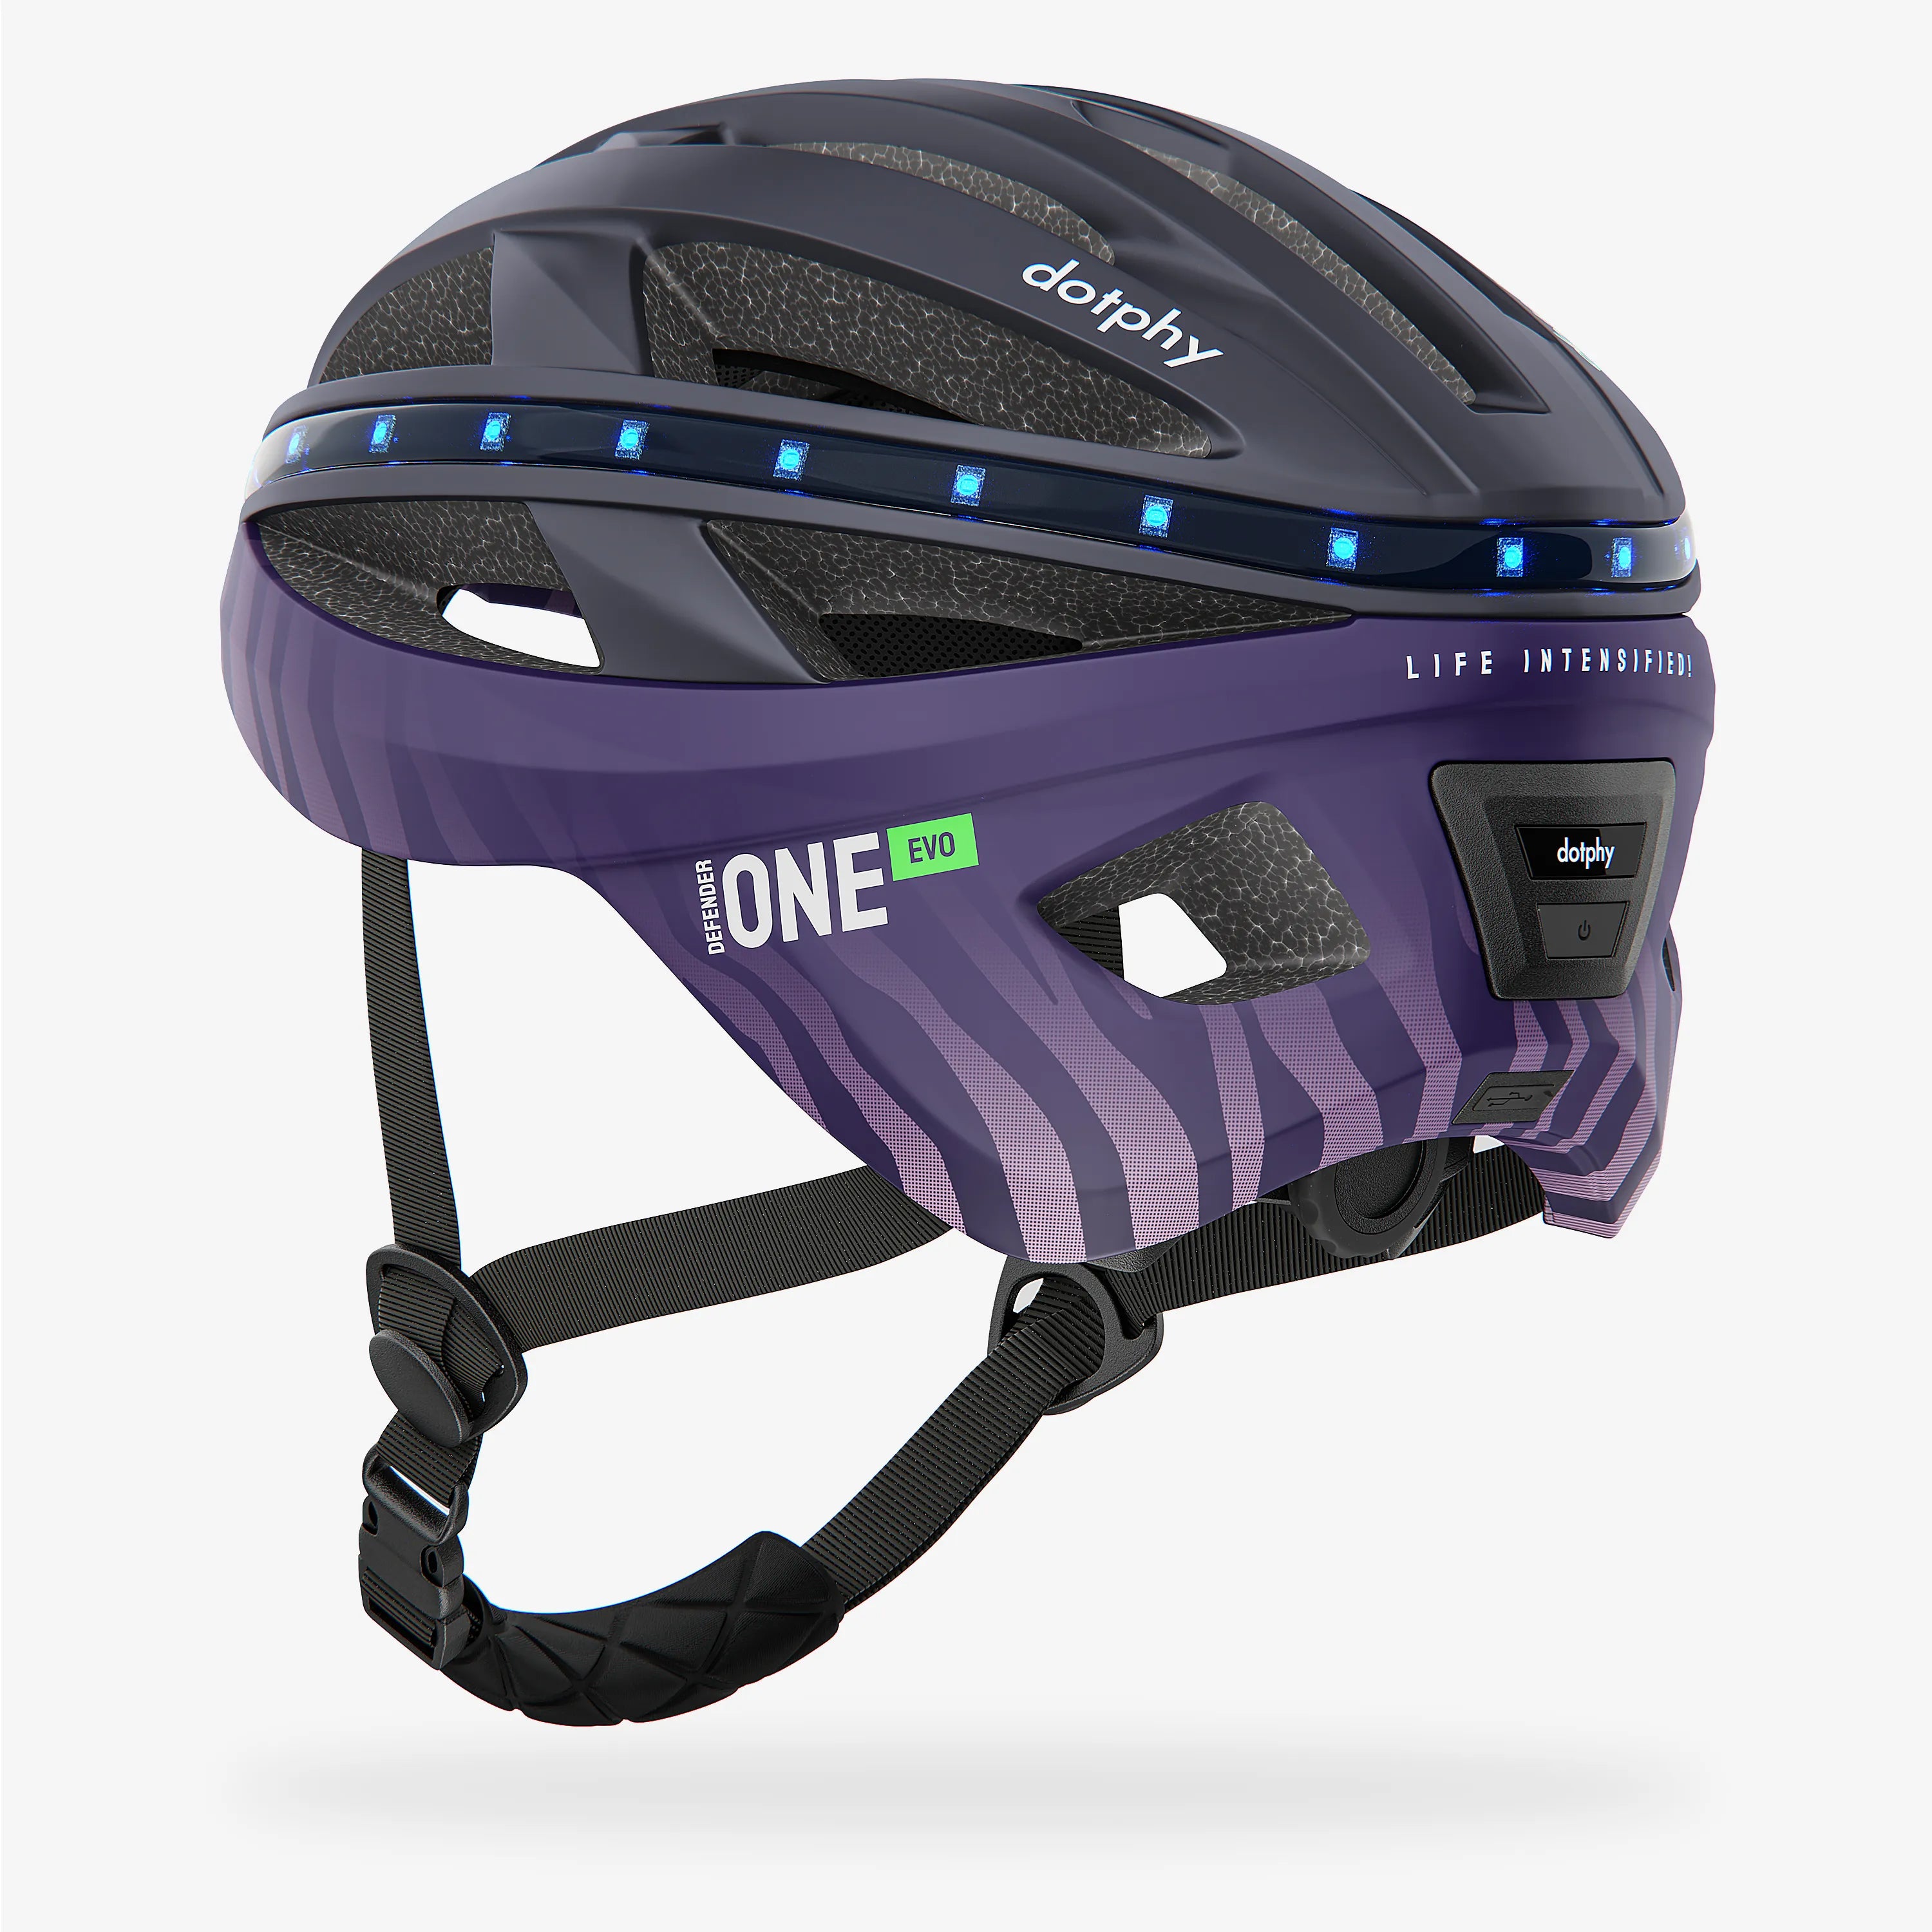 Defender One Evo Deep Gray Bike Helmet グレーの自転車用ヘルメット